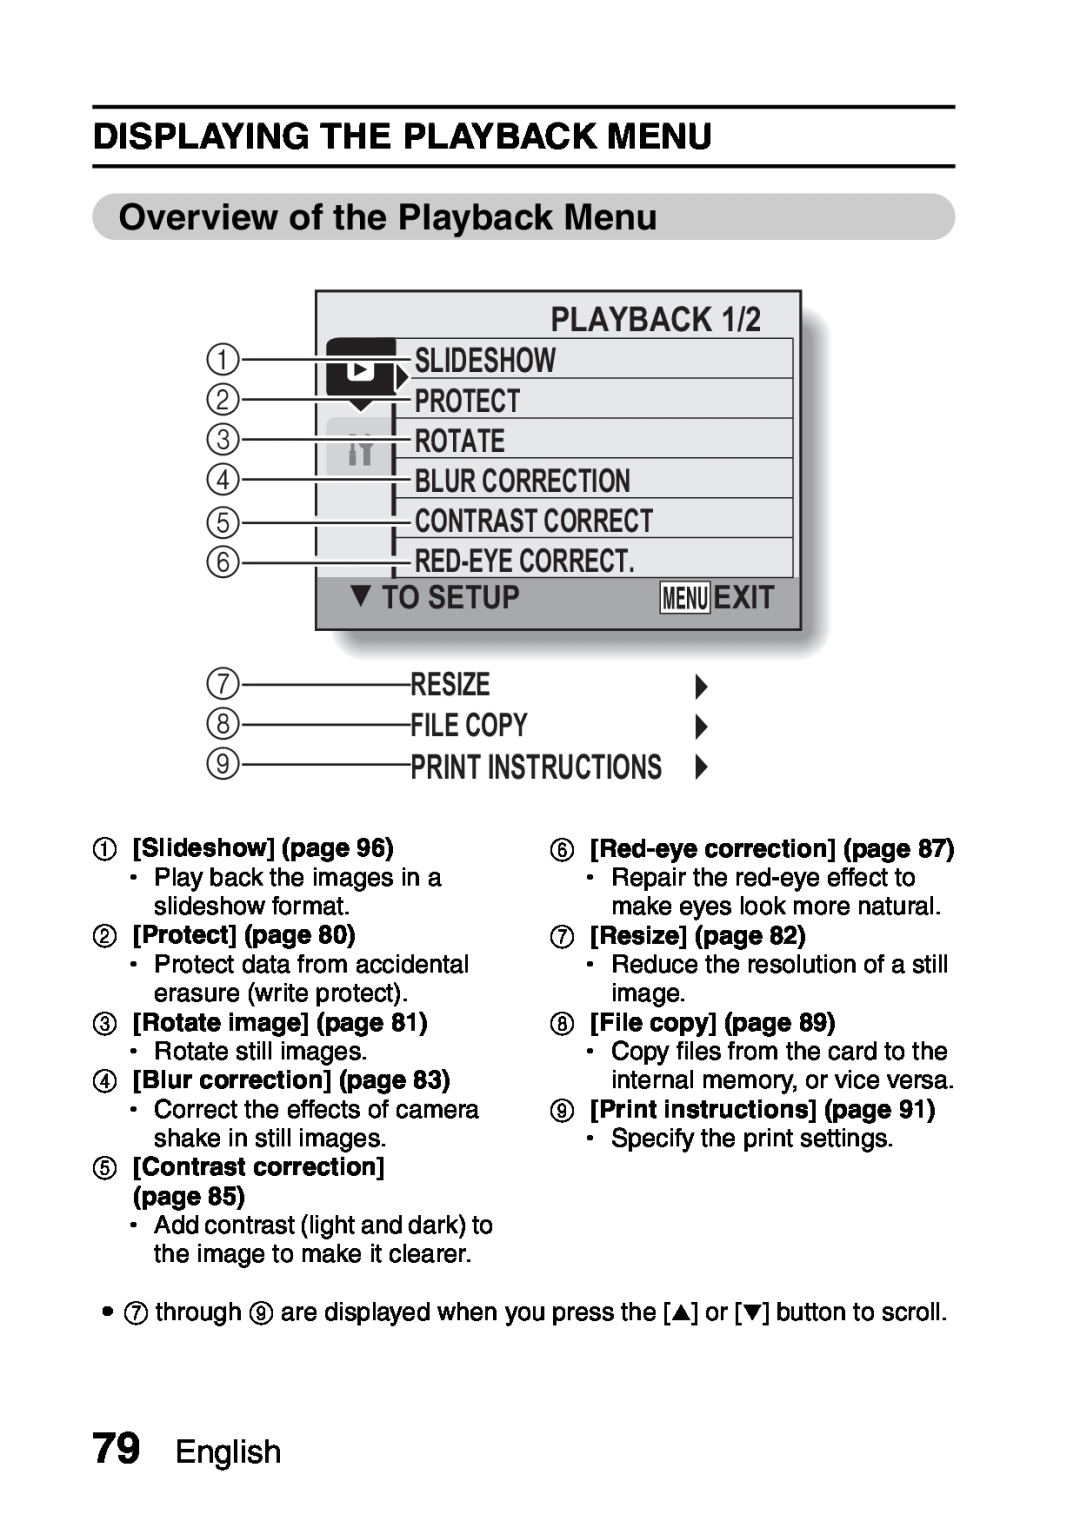 Samsung R50 DISPLAYING THE PLAYBACK MENU Overview of the Playback Menu, PLAYBACK 1/2, Slideshow, Protect, Rotate, Exit 